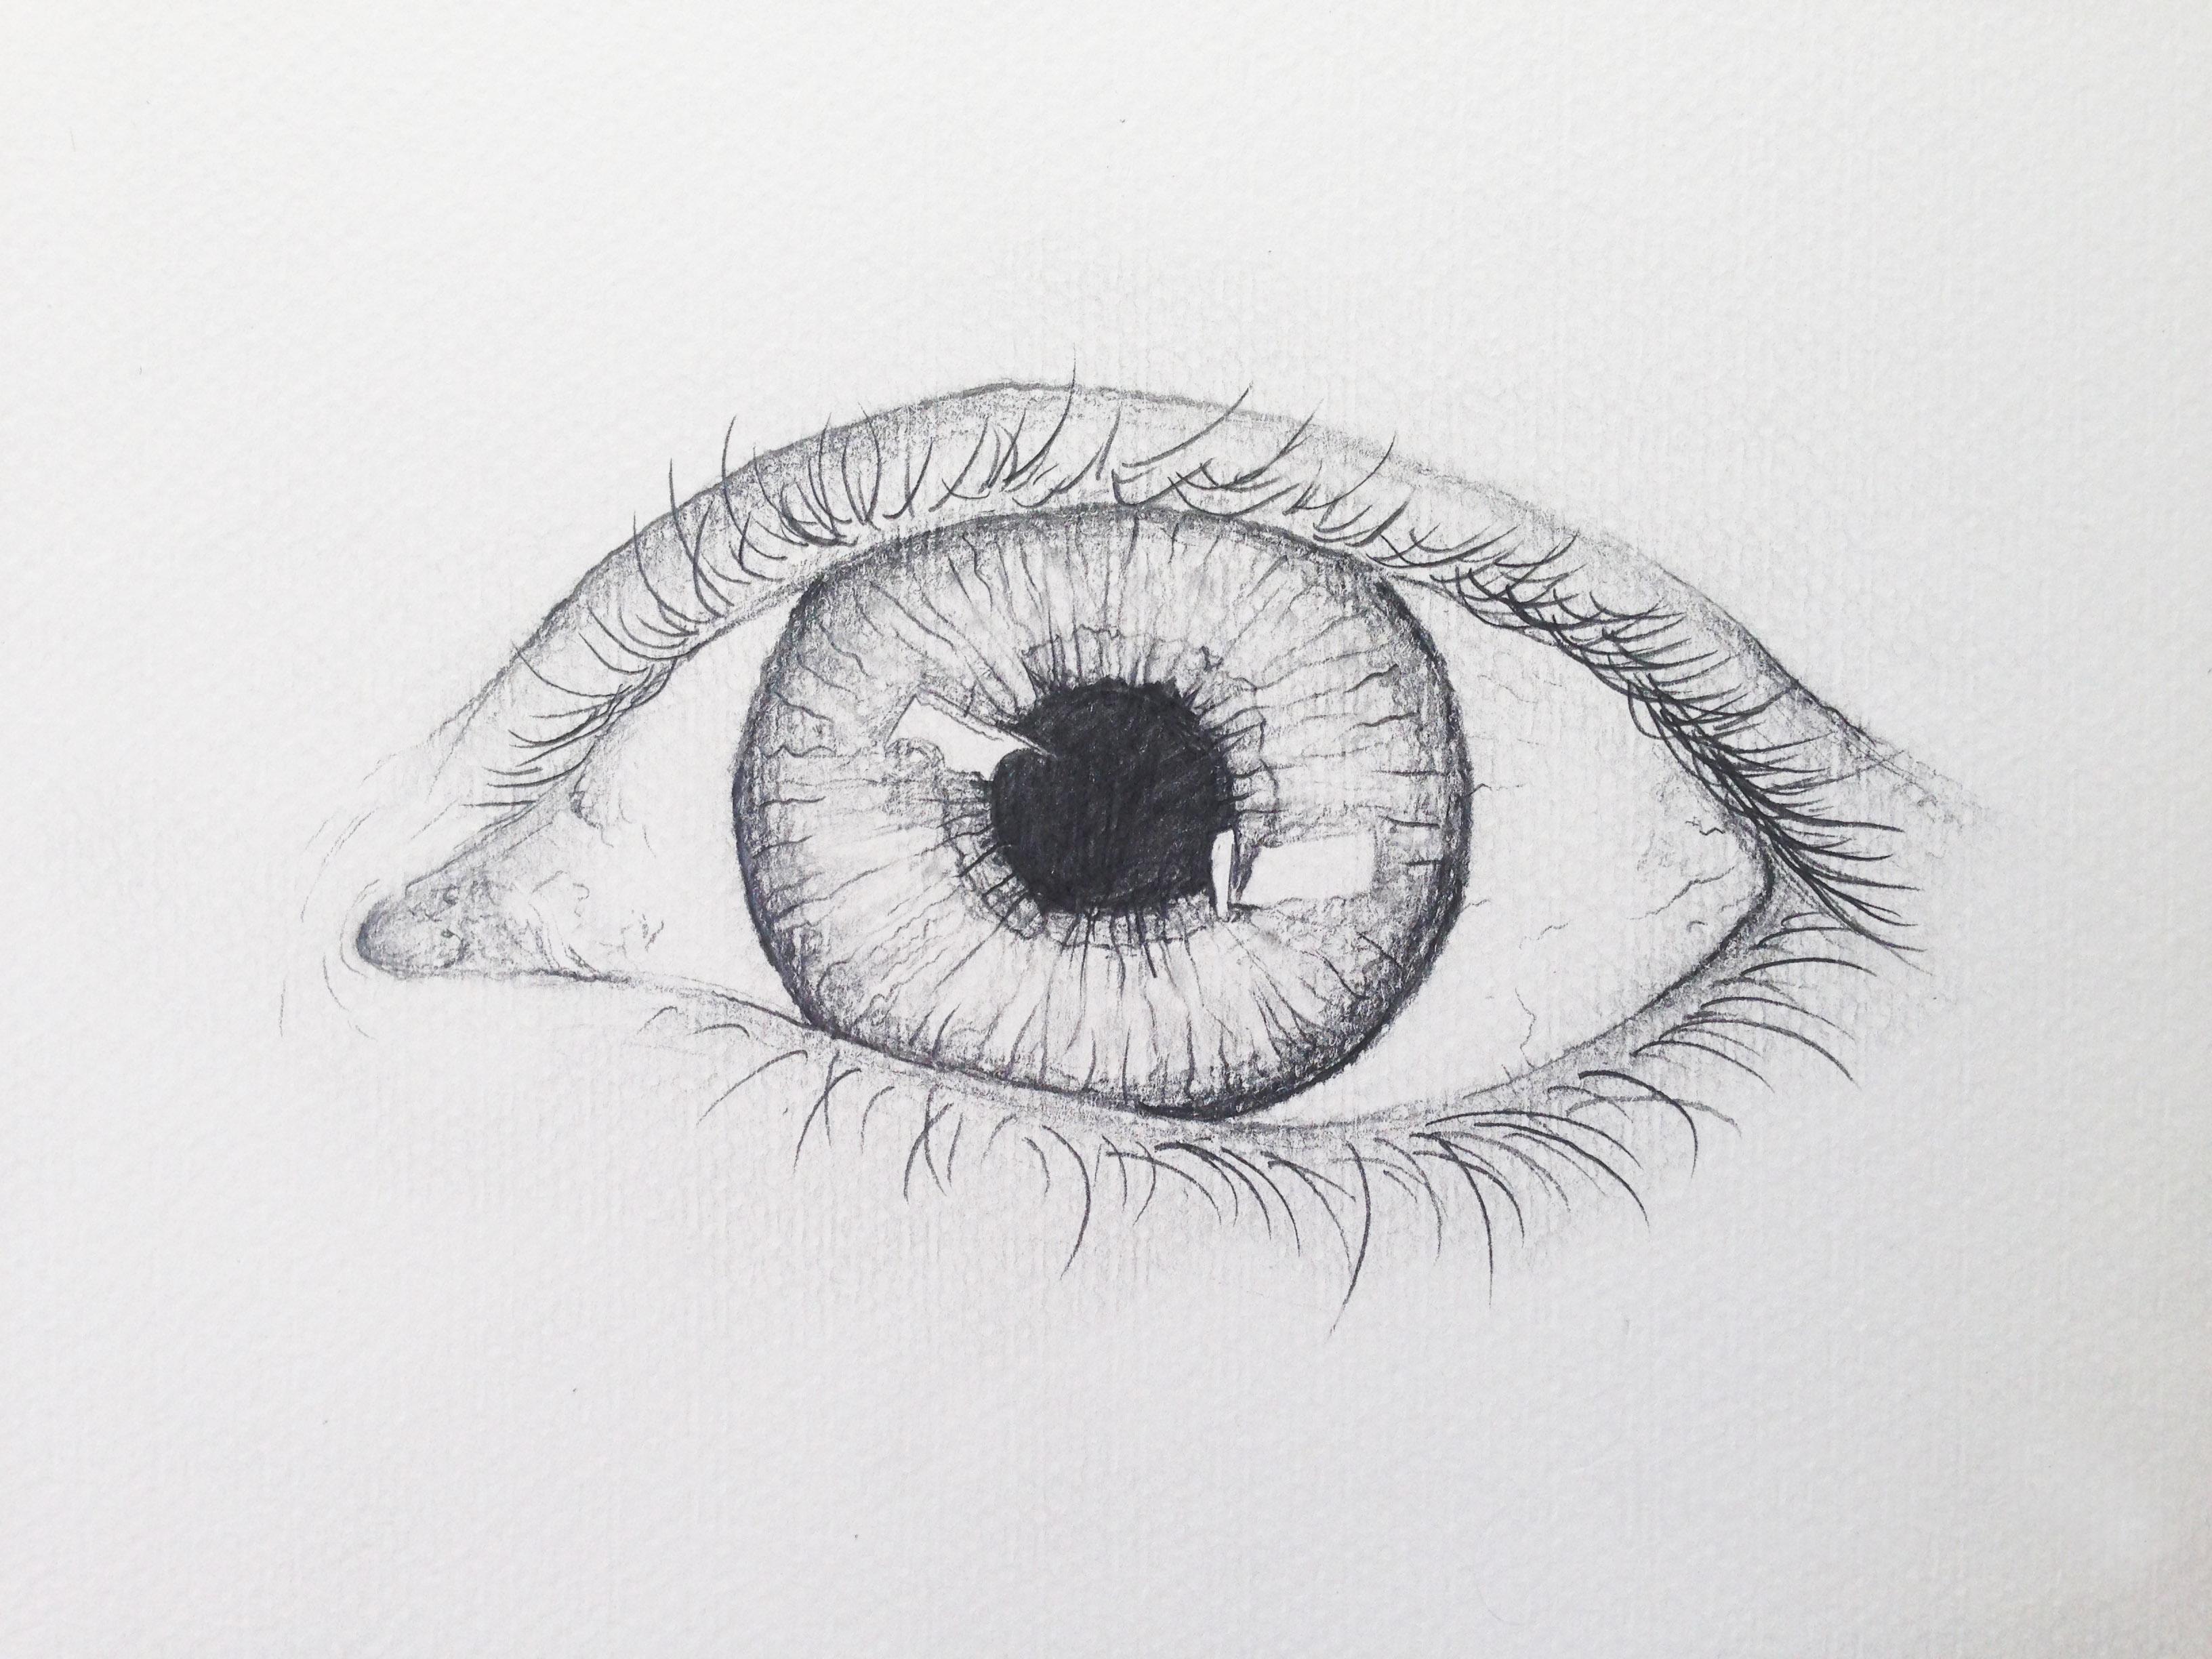 How To Draw An Eye Easy 25 Impressive Ways To Draw An Eye Easily